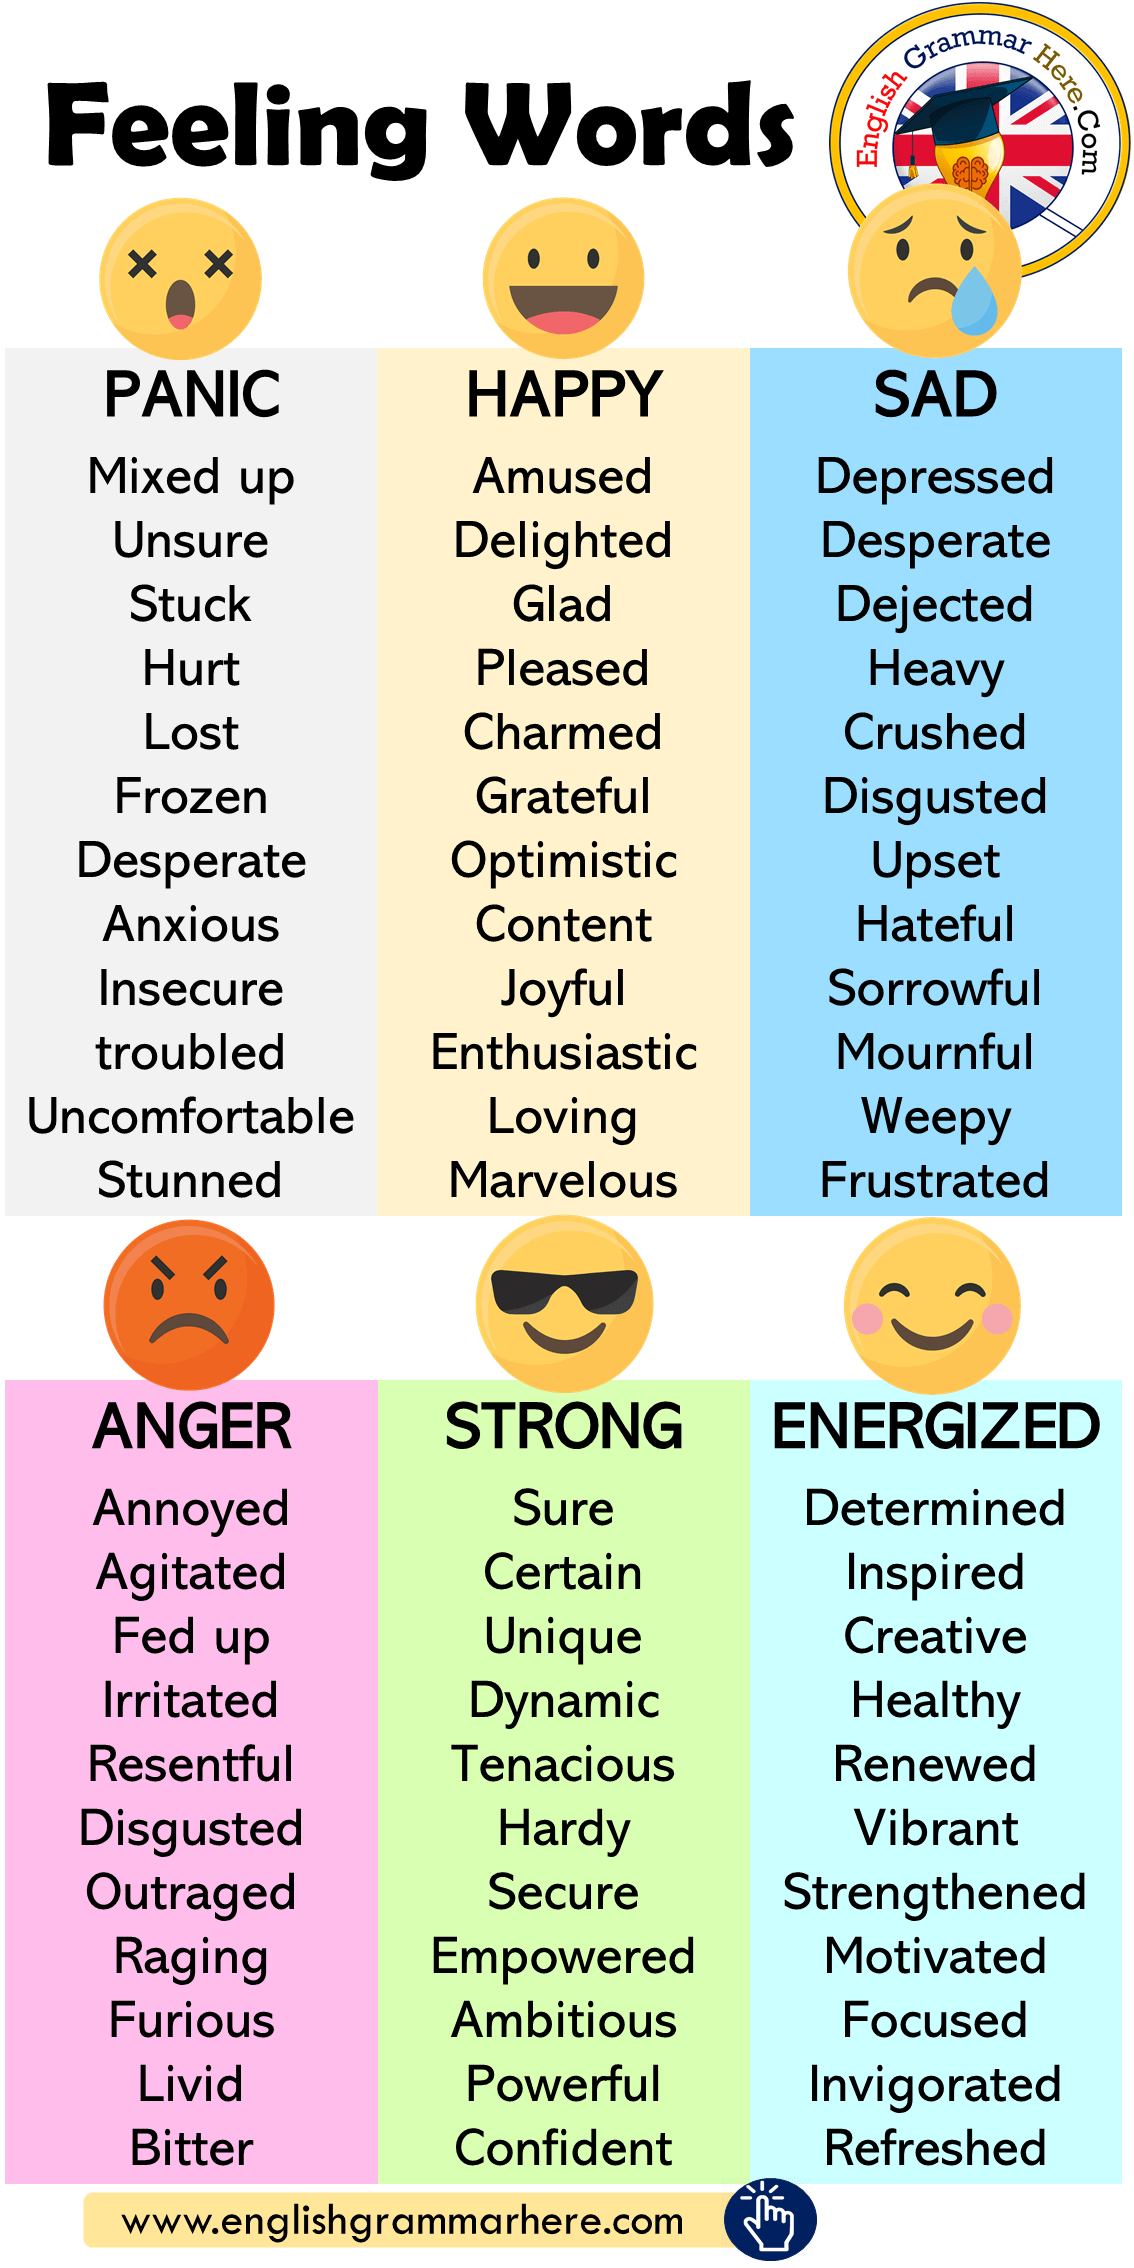 Feeling Words List in English